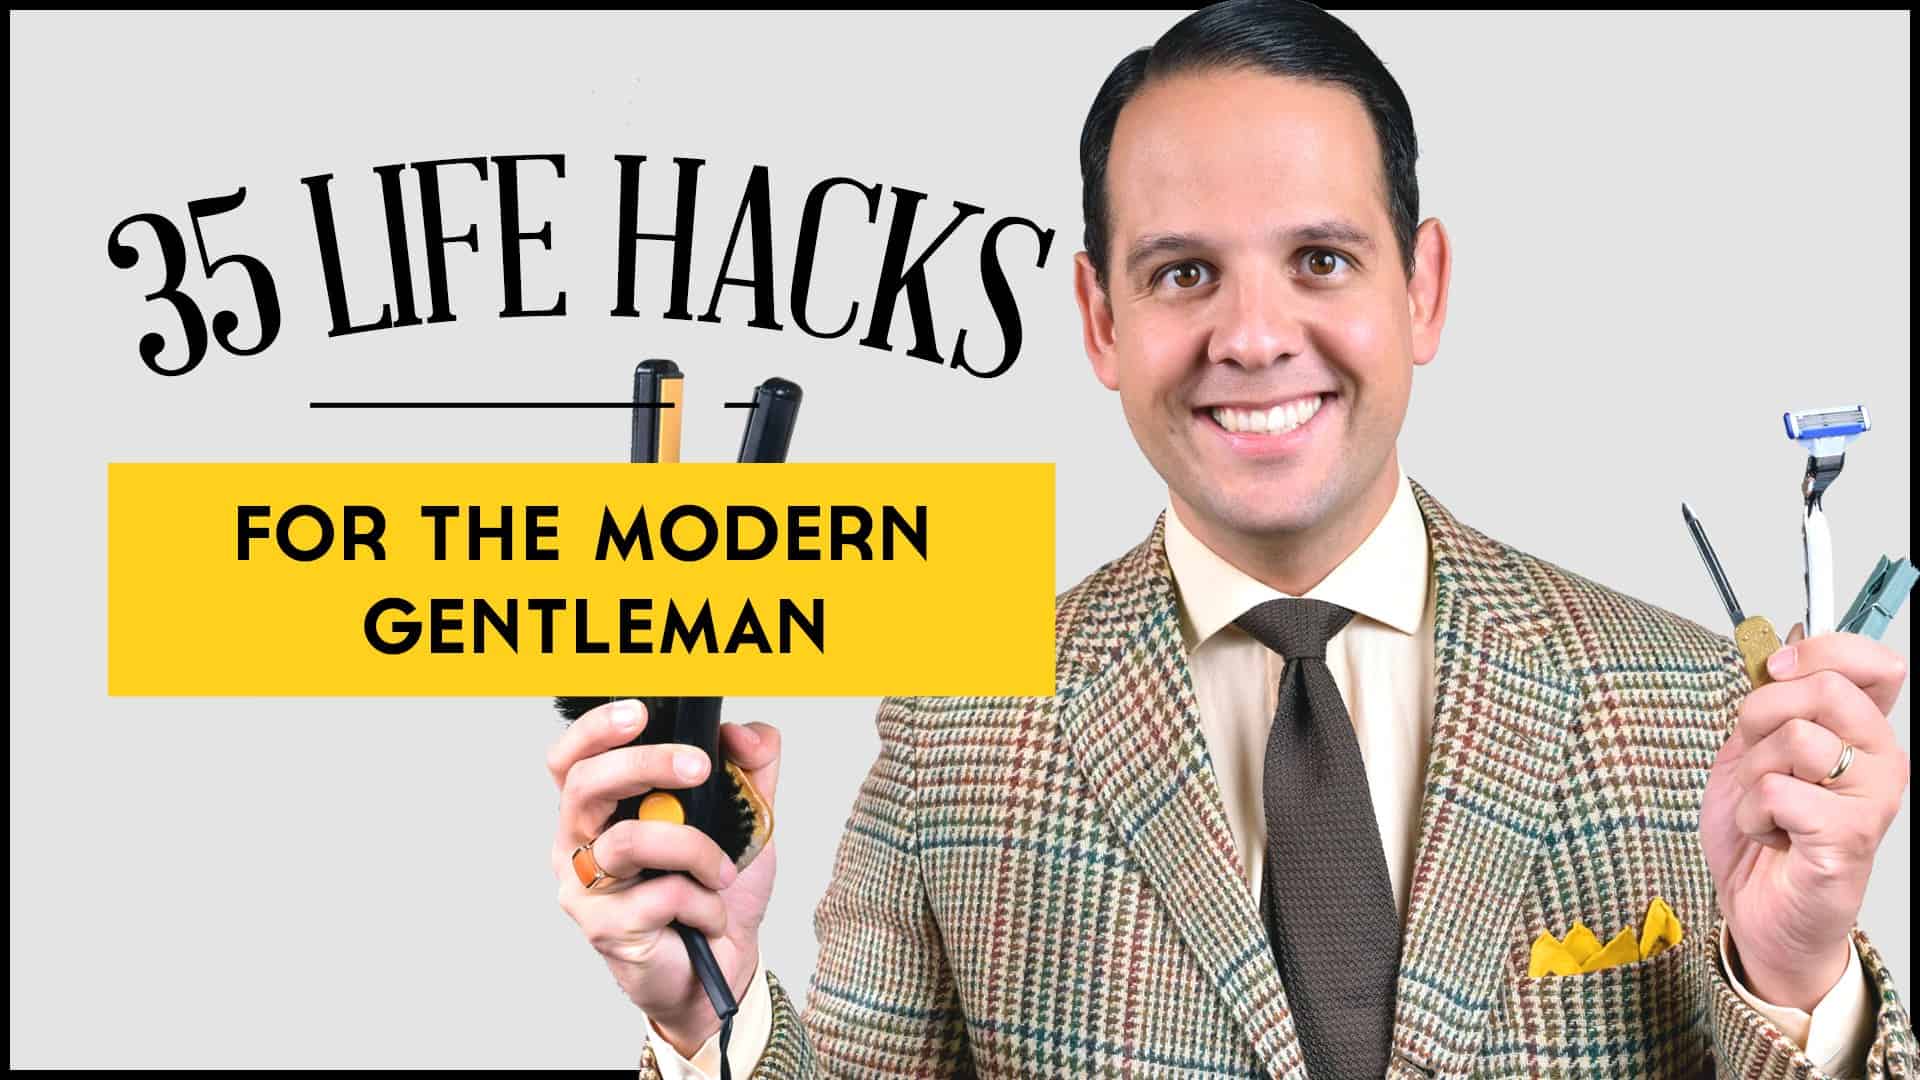 35 Life Hacks For The Modern Gentleman